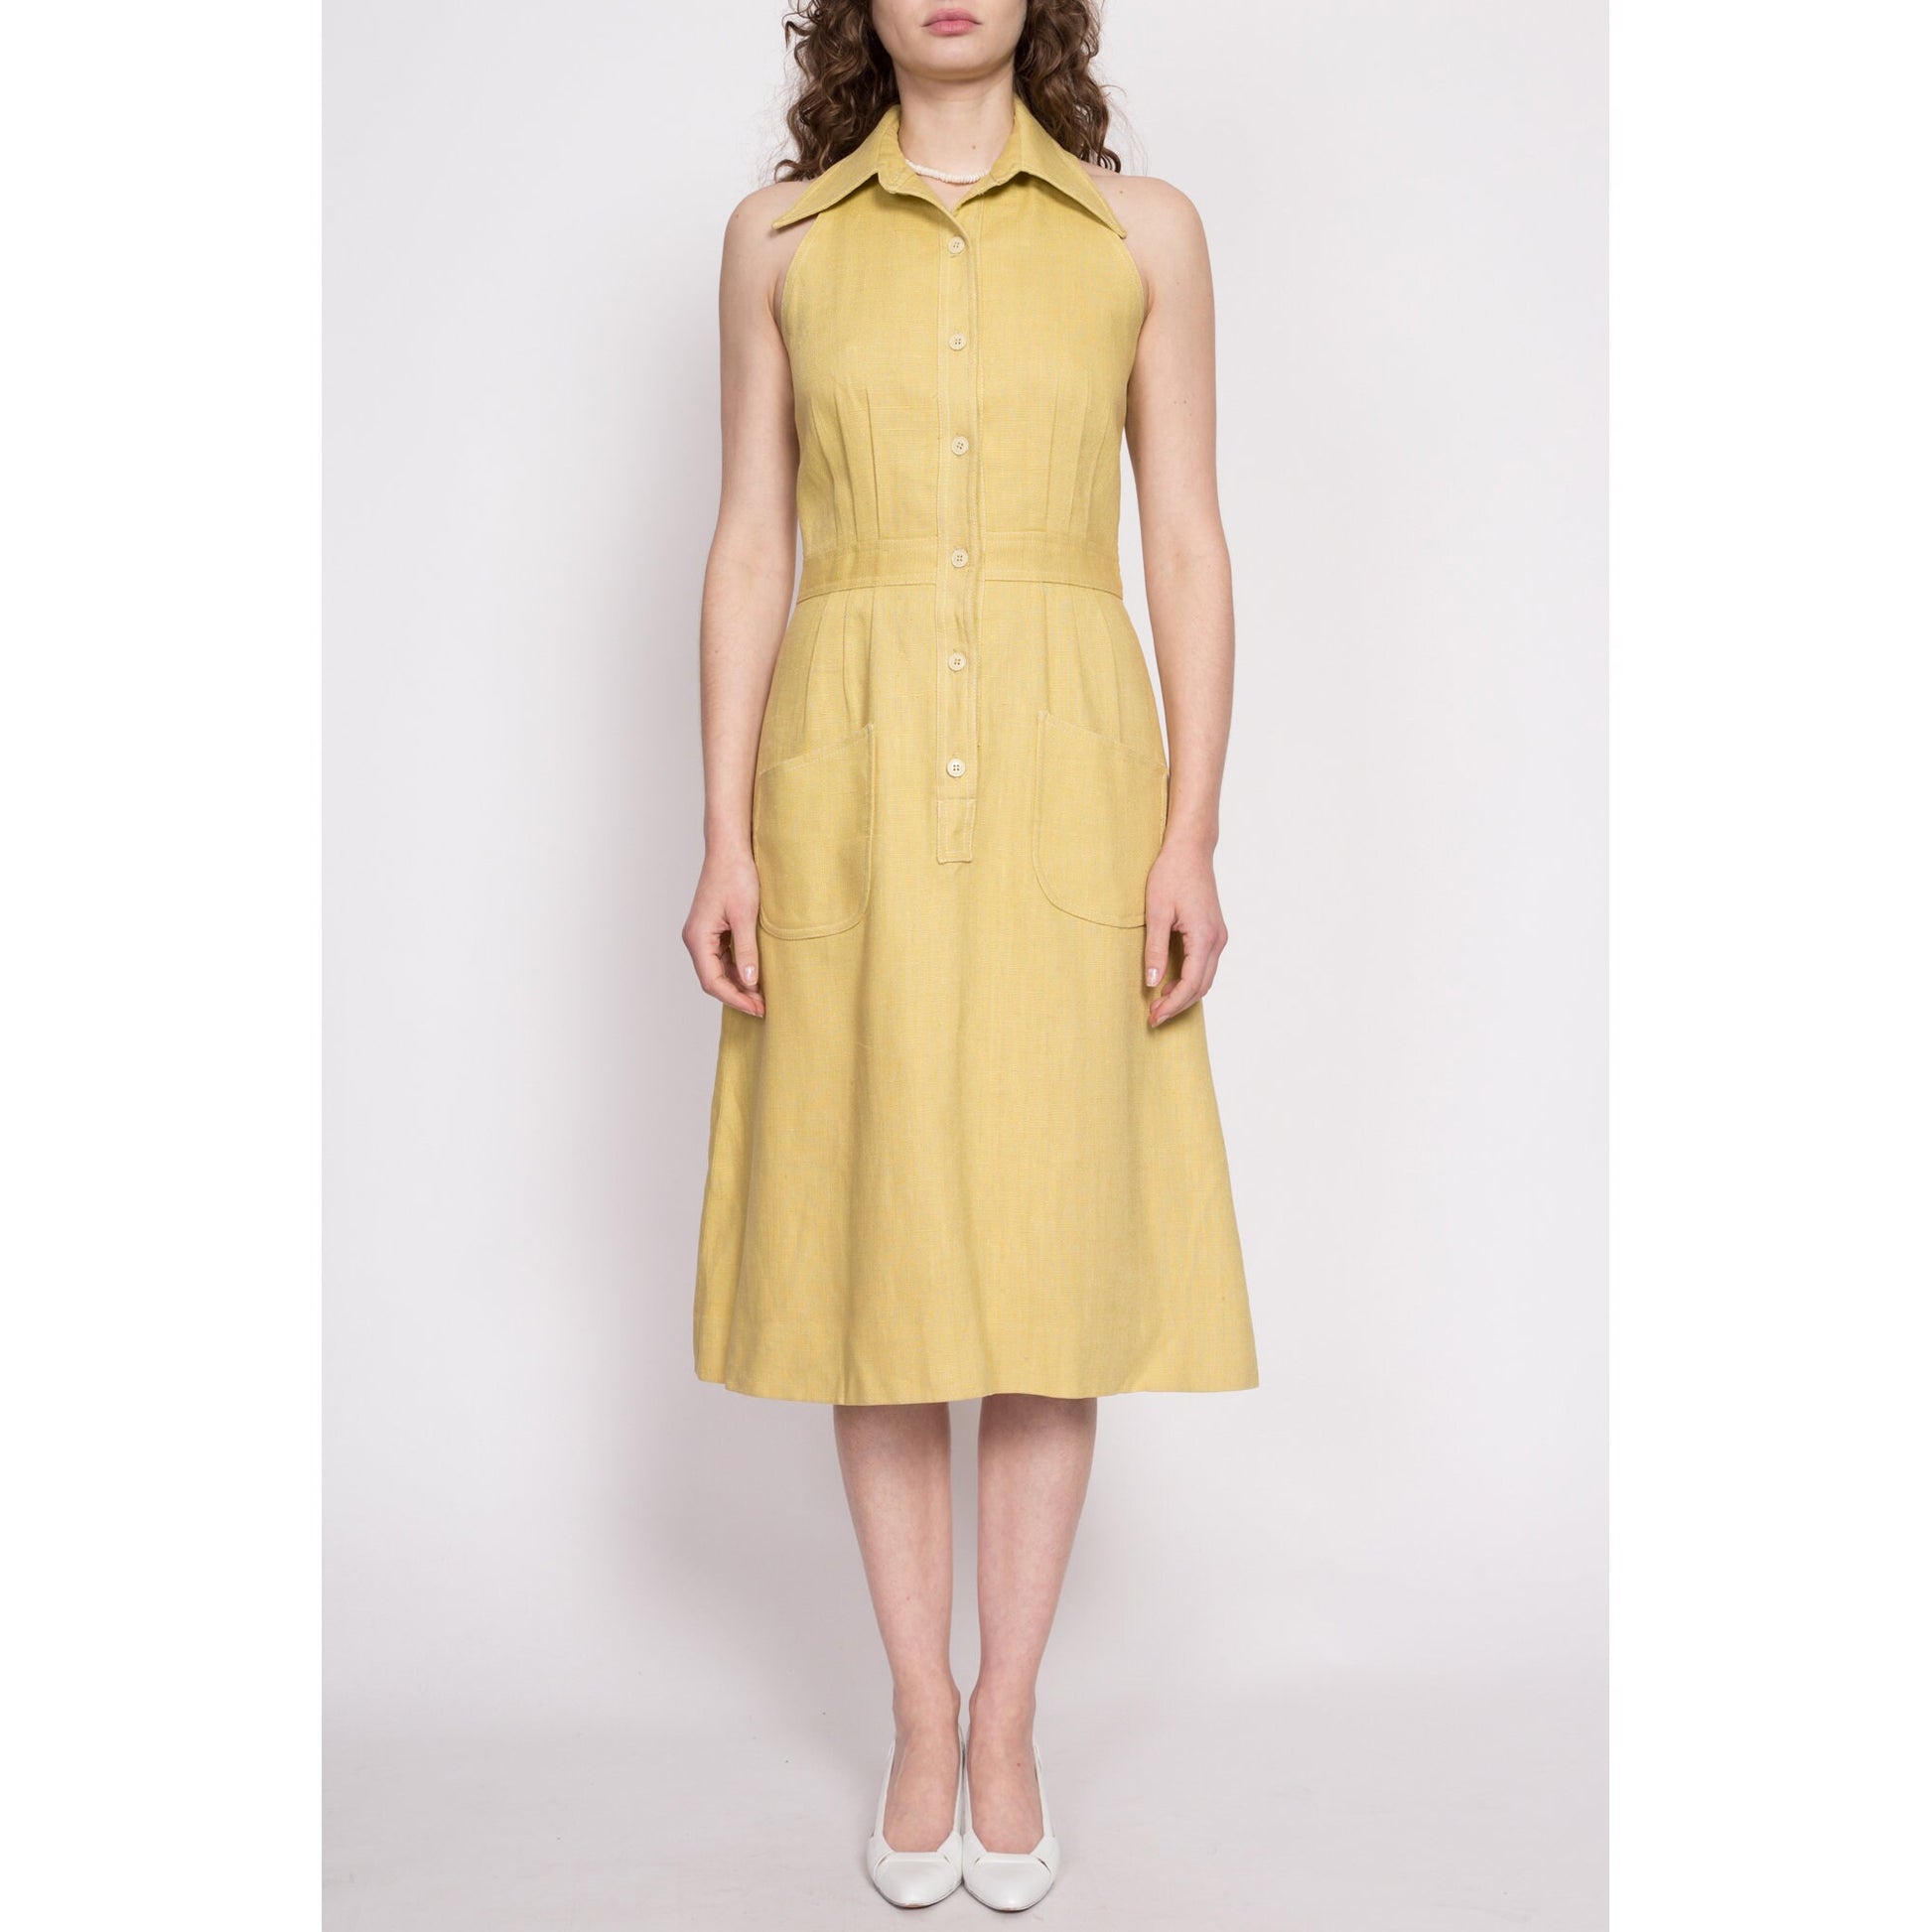 70s Mustard Yellow Linen Racerback Dress - Medium | Vintage Button Up Sleeveless Pocket Midi Dress